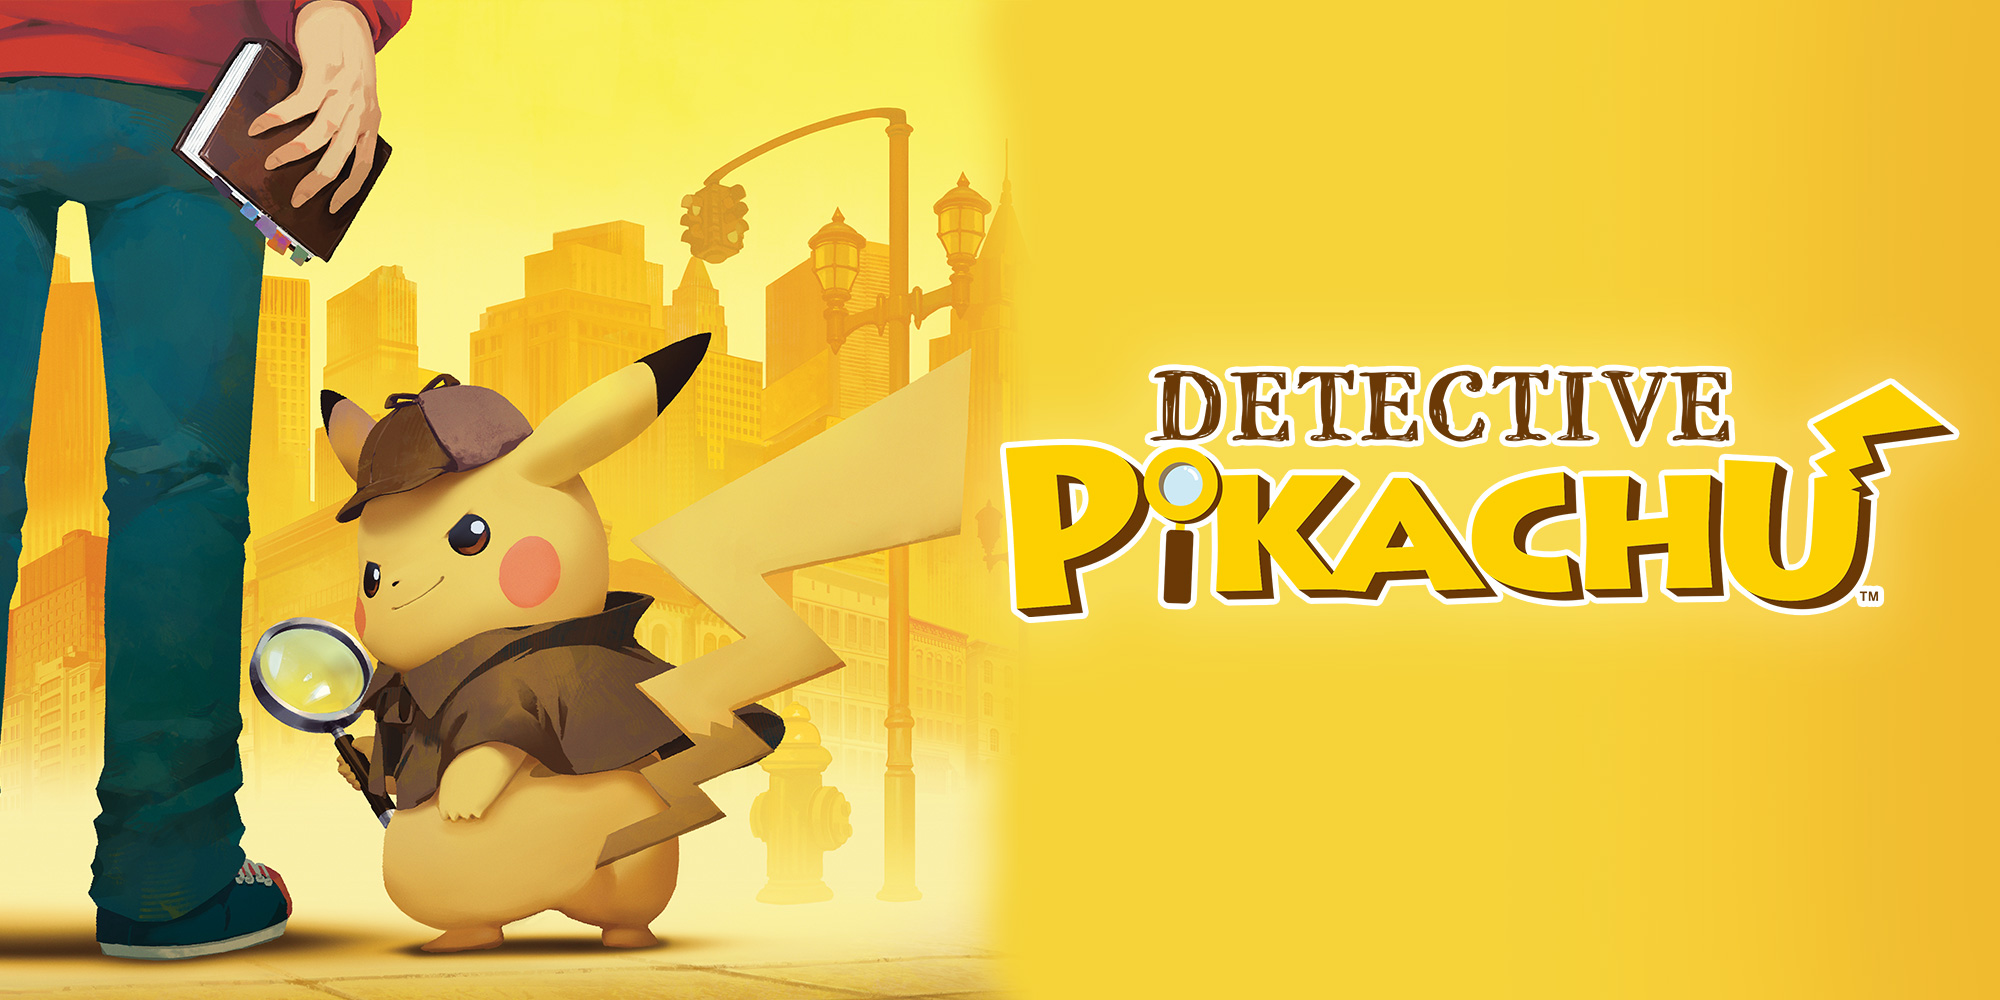 Detective Pikachu Lock Screen Images